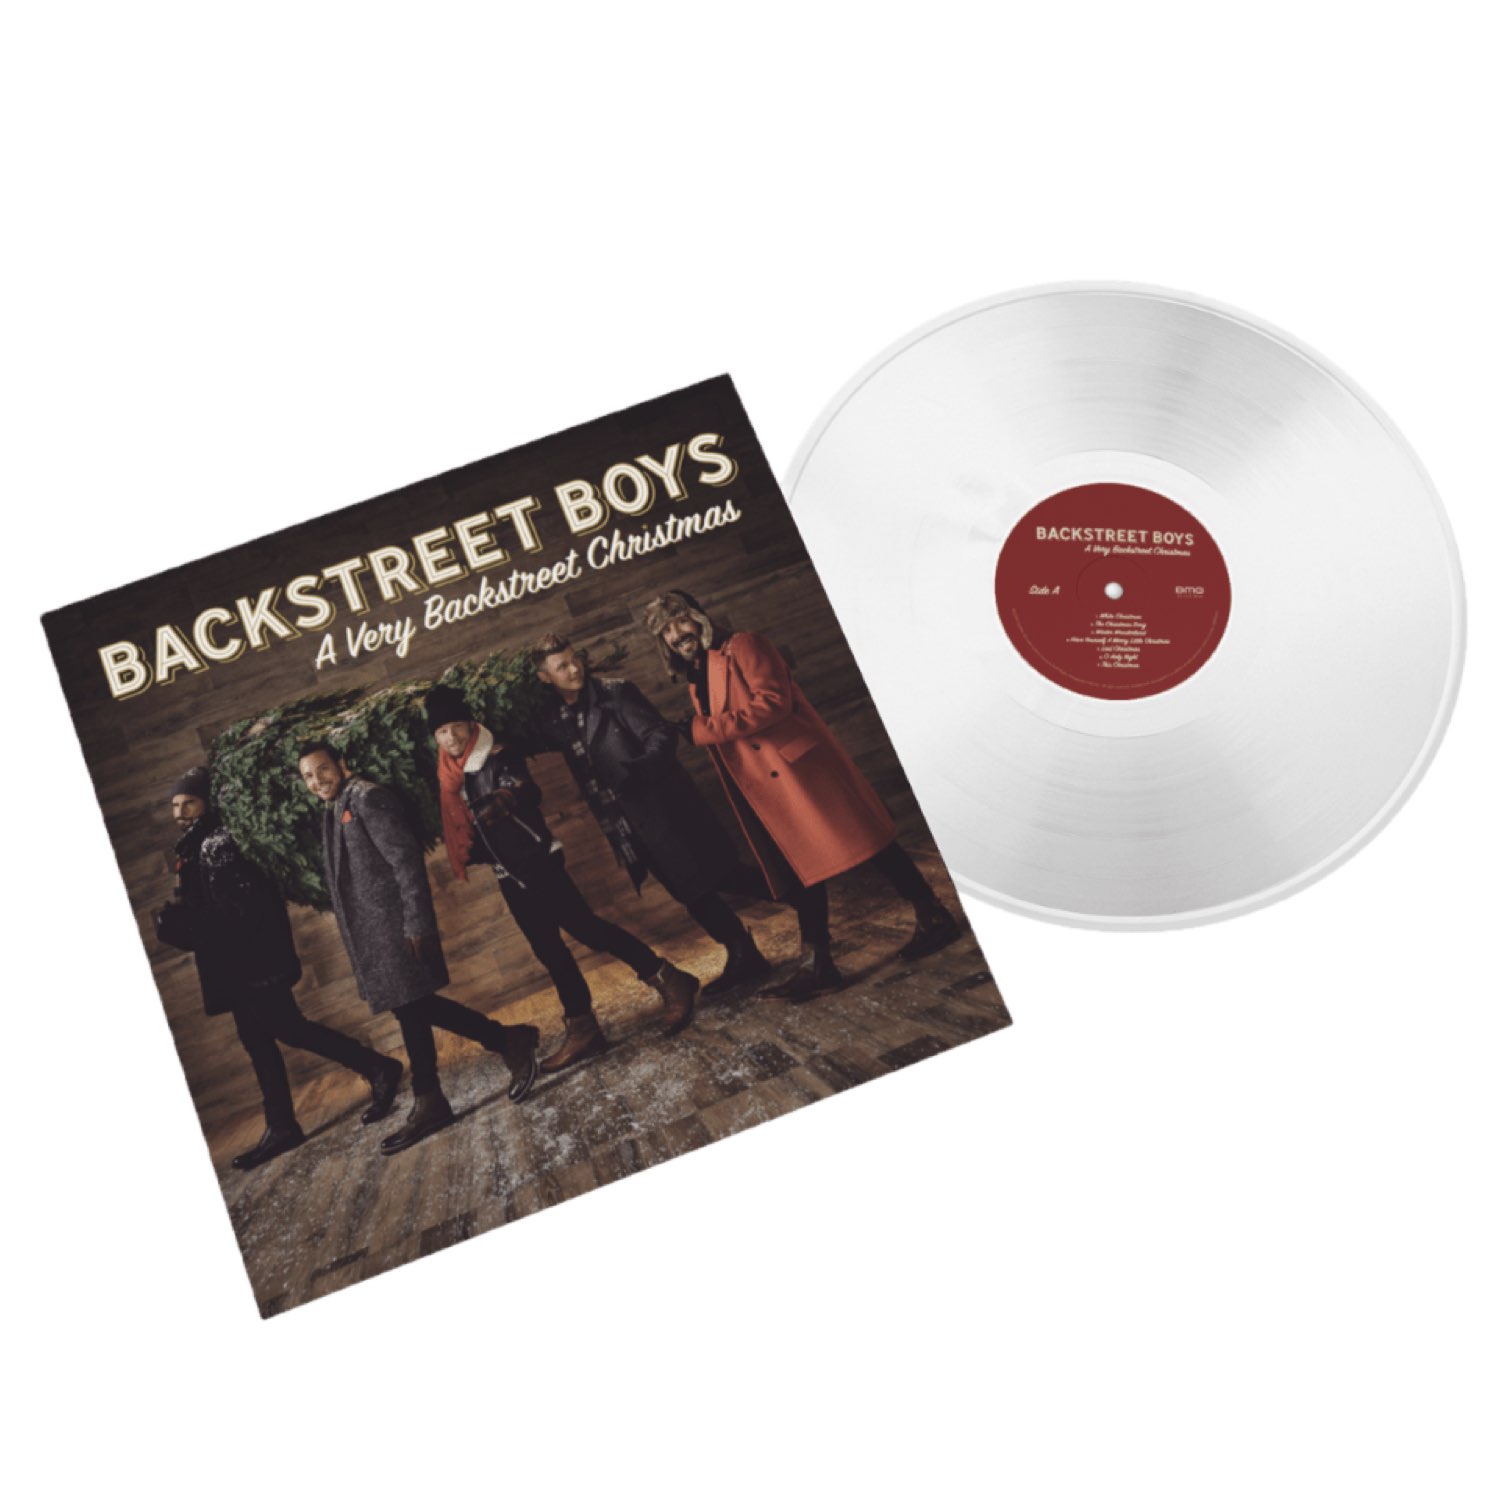 Backstreet Boys - A Very Backstreet Christmas [Limited Edition - White Vinyl]